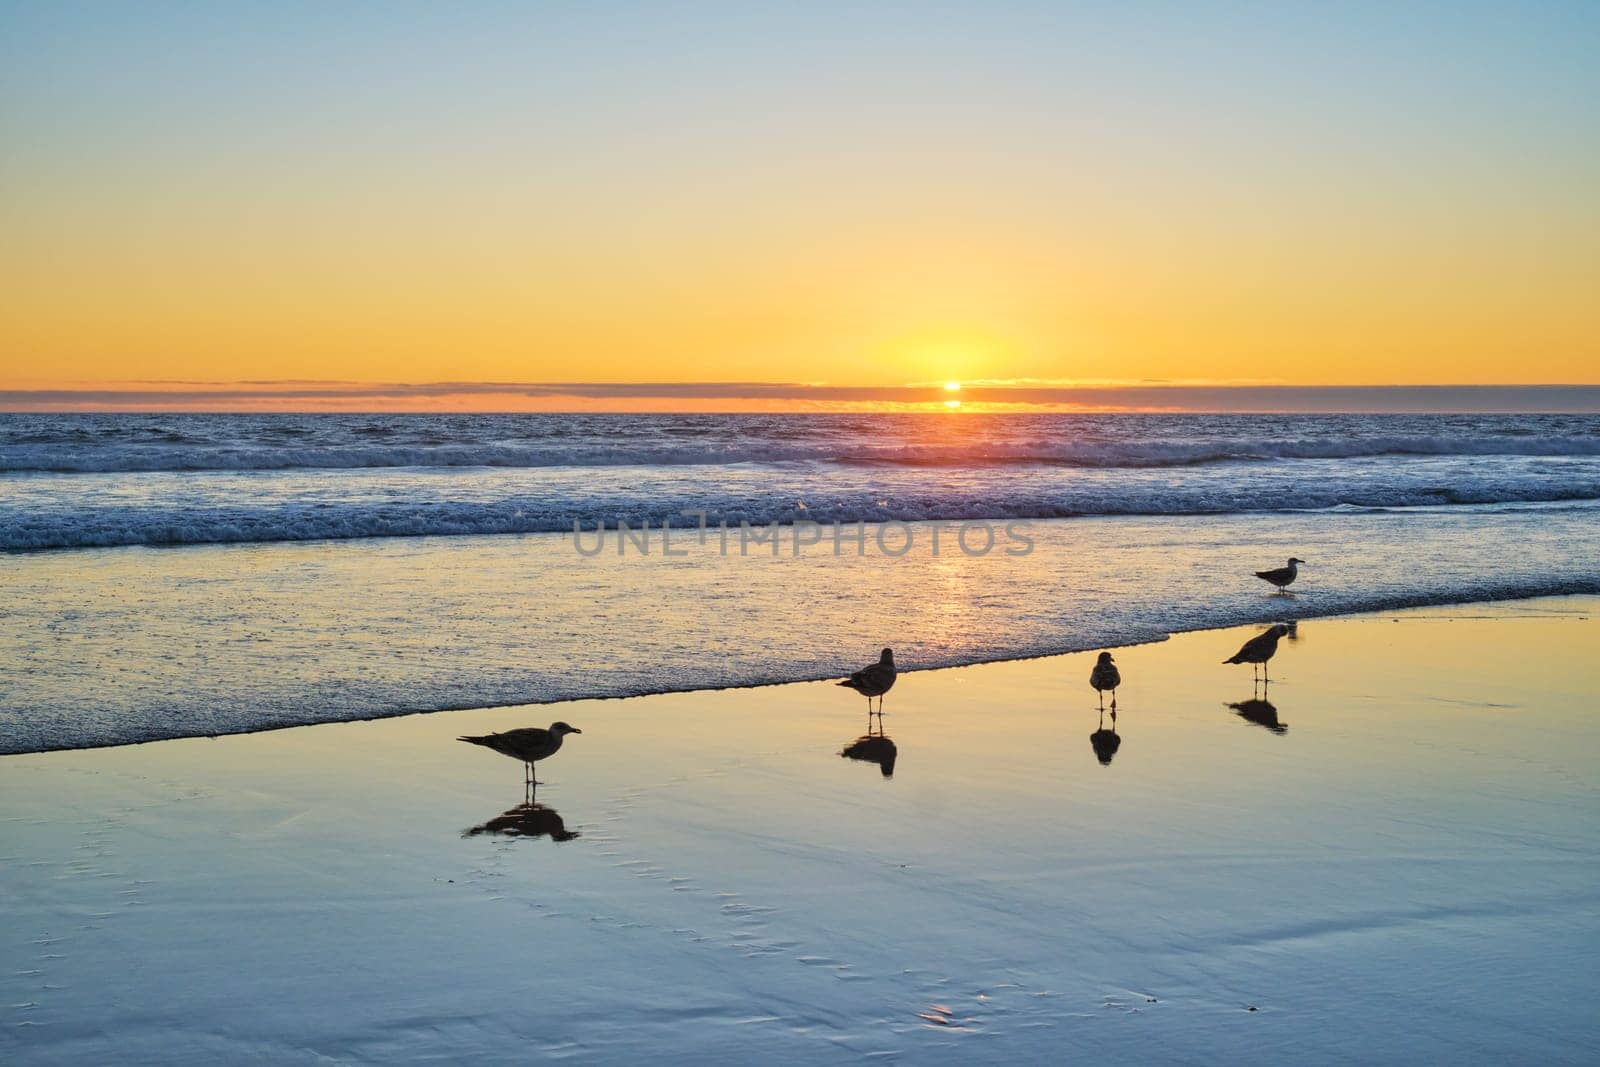 Seagulls on beach atlantic ocean sunset with surging waves at Fonte da Telha beach, Portugal by dimol